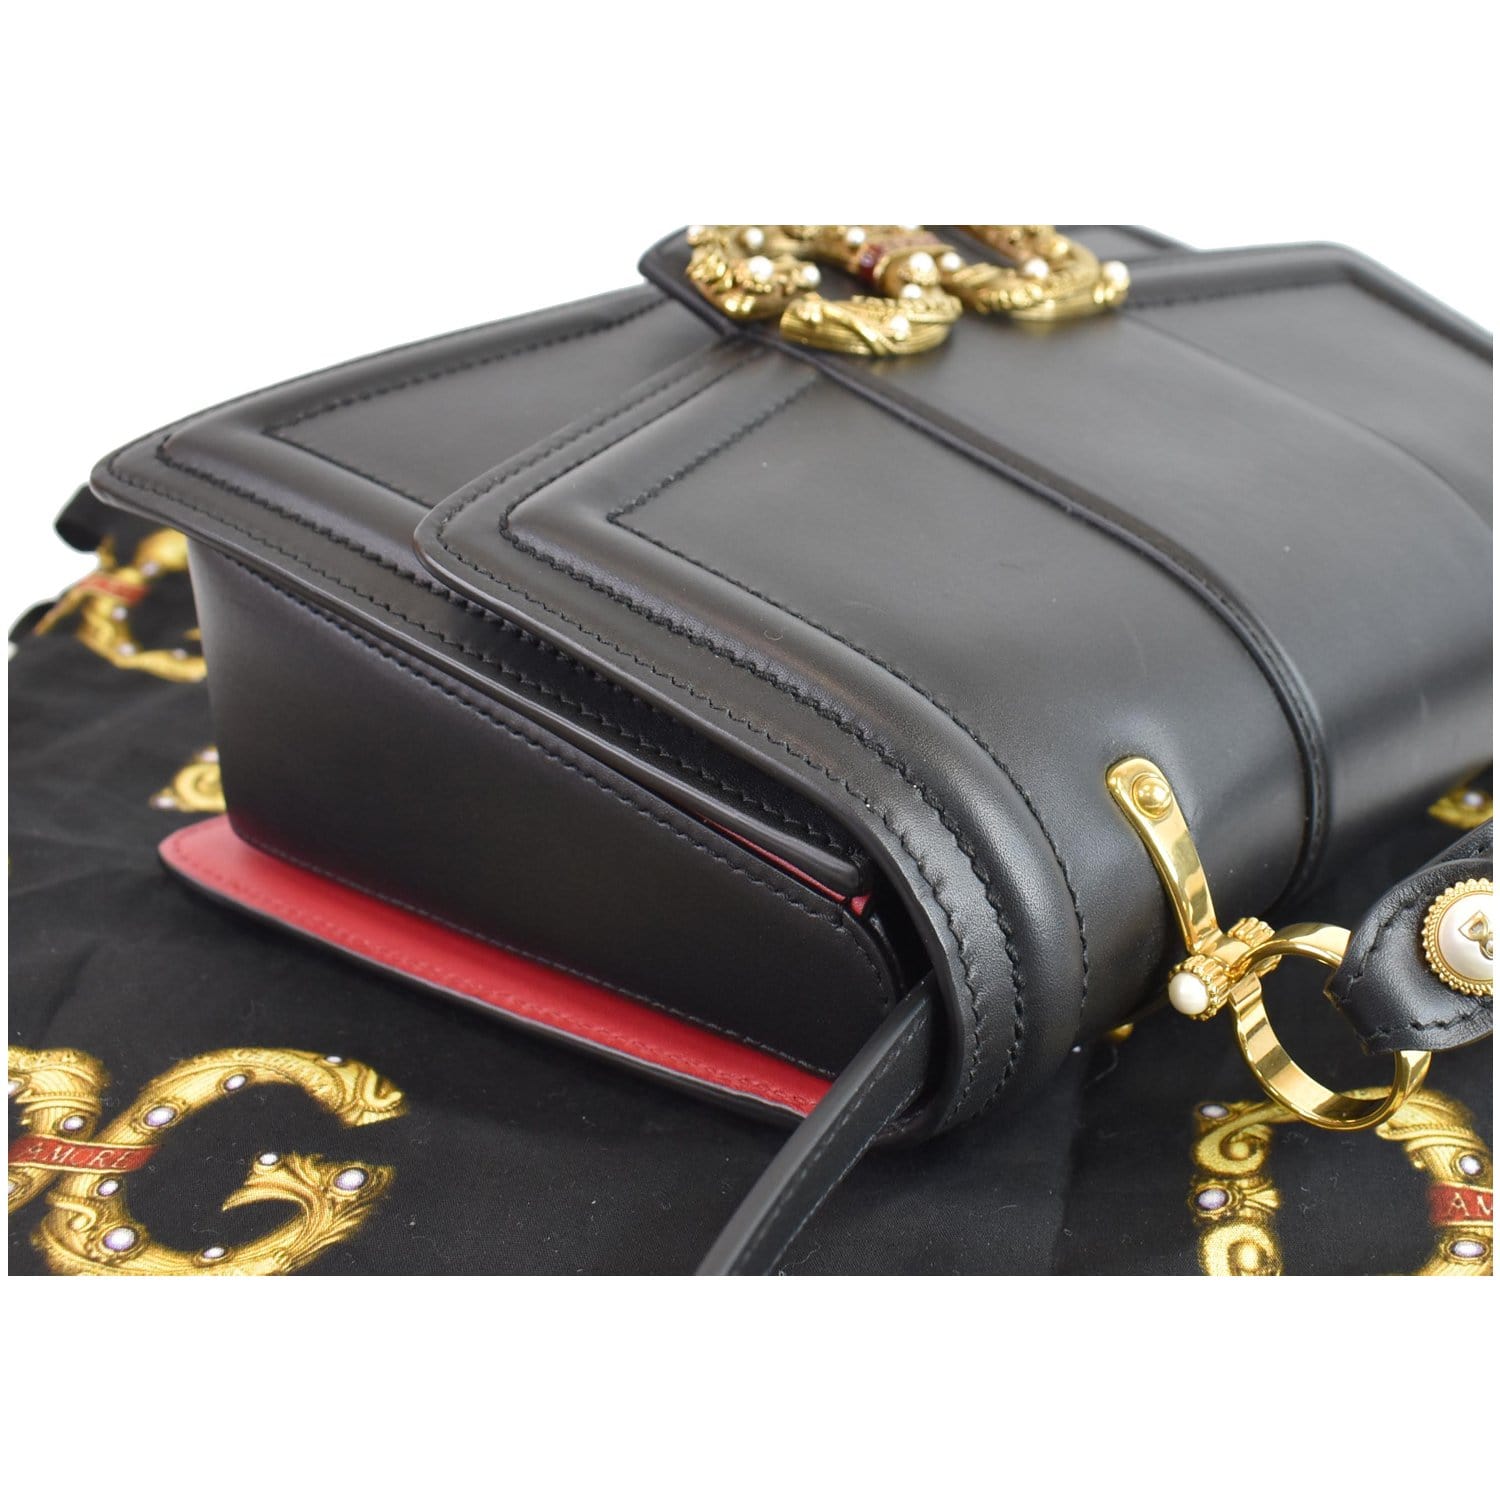 Black Dolce&Gabbana Leather Clutch Bag